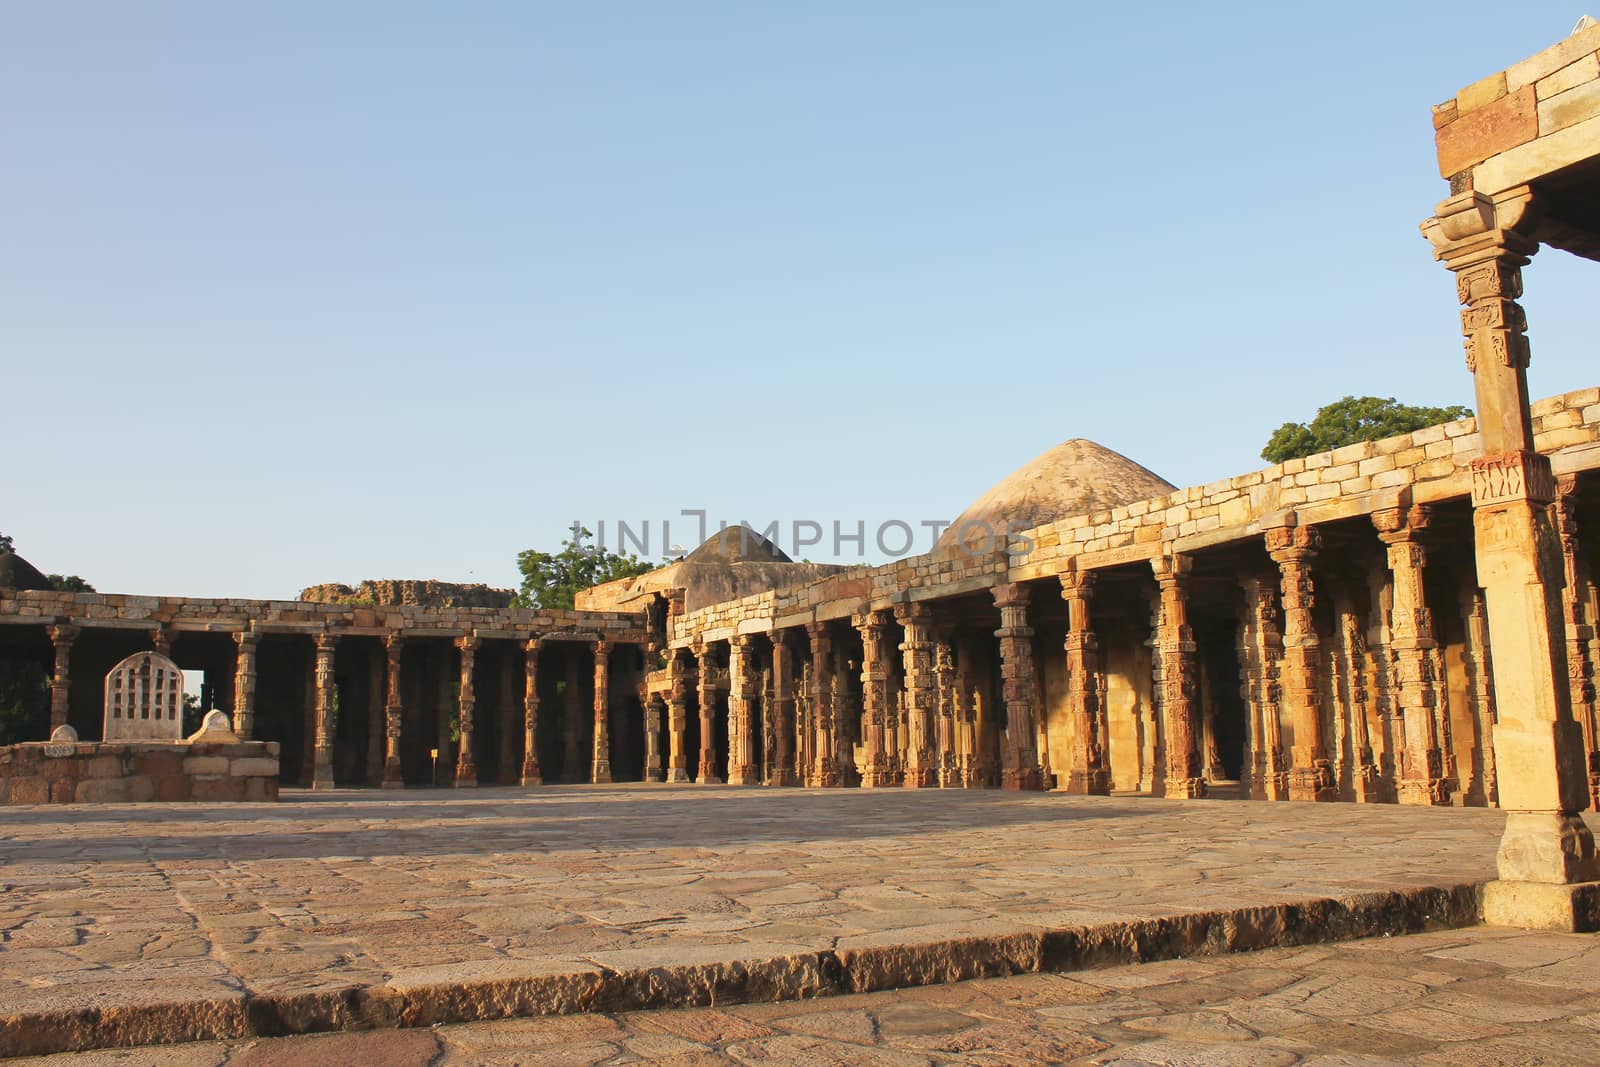 number of pillars in qutub minar